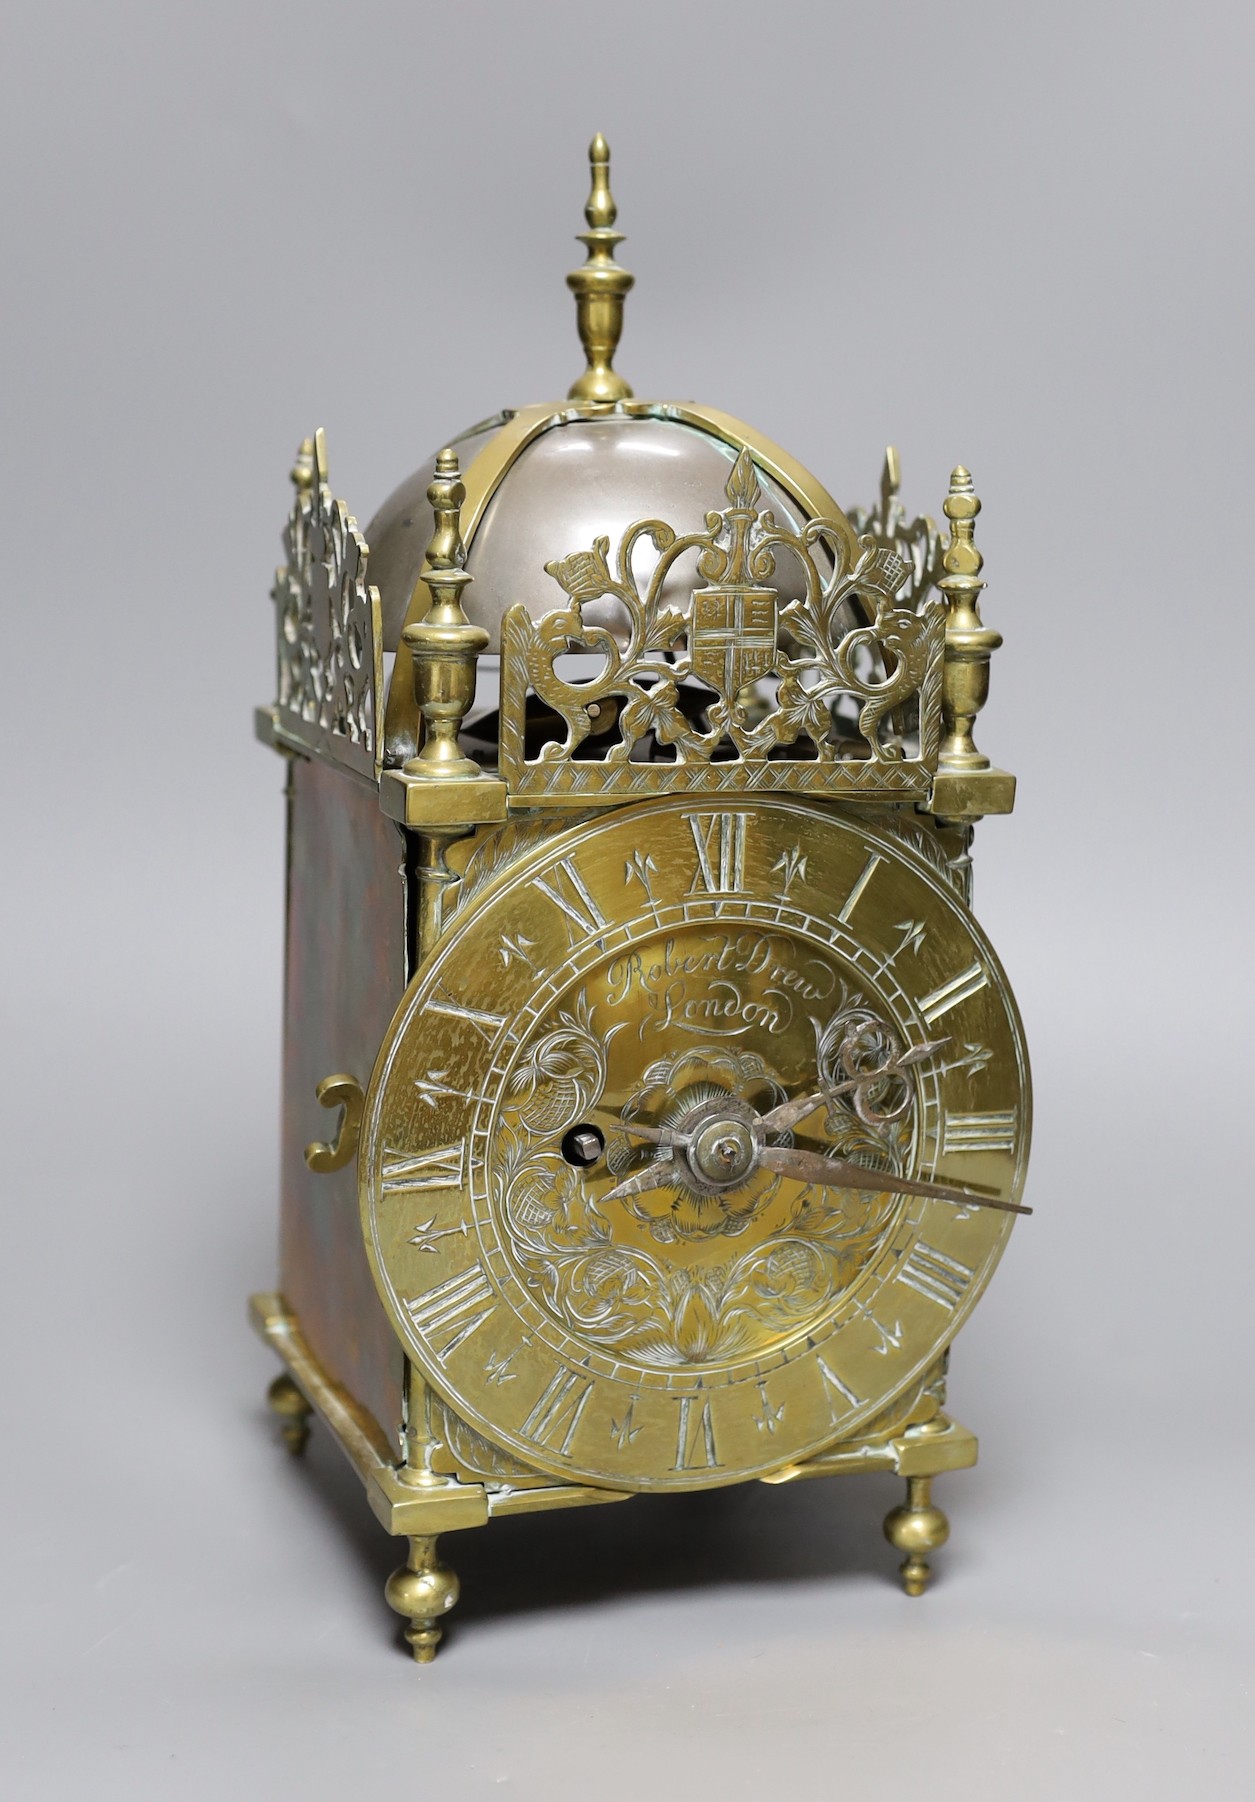 A brass lantern clock, signed Robert Drew, London, single fusee movement,34 cms high,